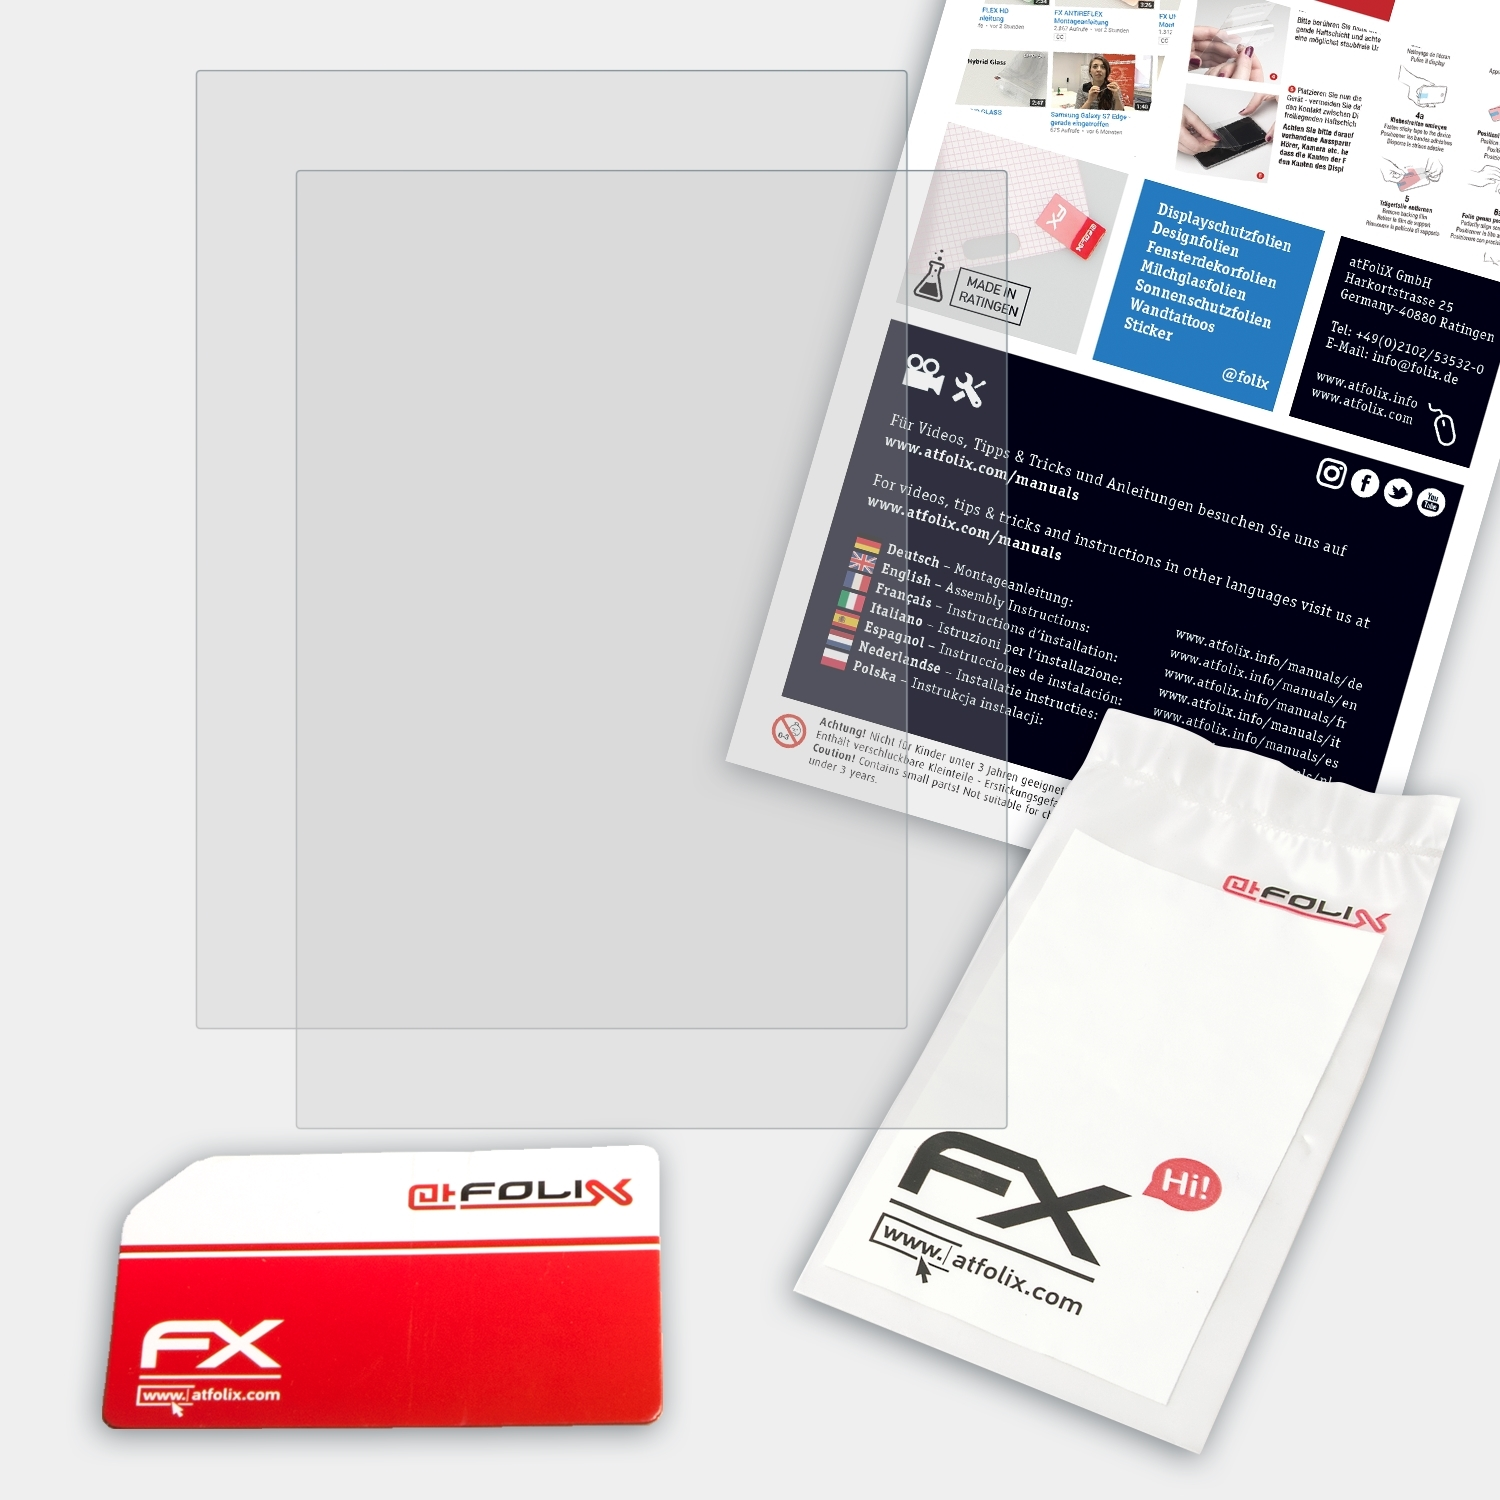 Amazon ATFOLIX 3G)) & Kindle FX-Antireflex (WiFi Paperwhite Displayschutz(für 2x